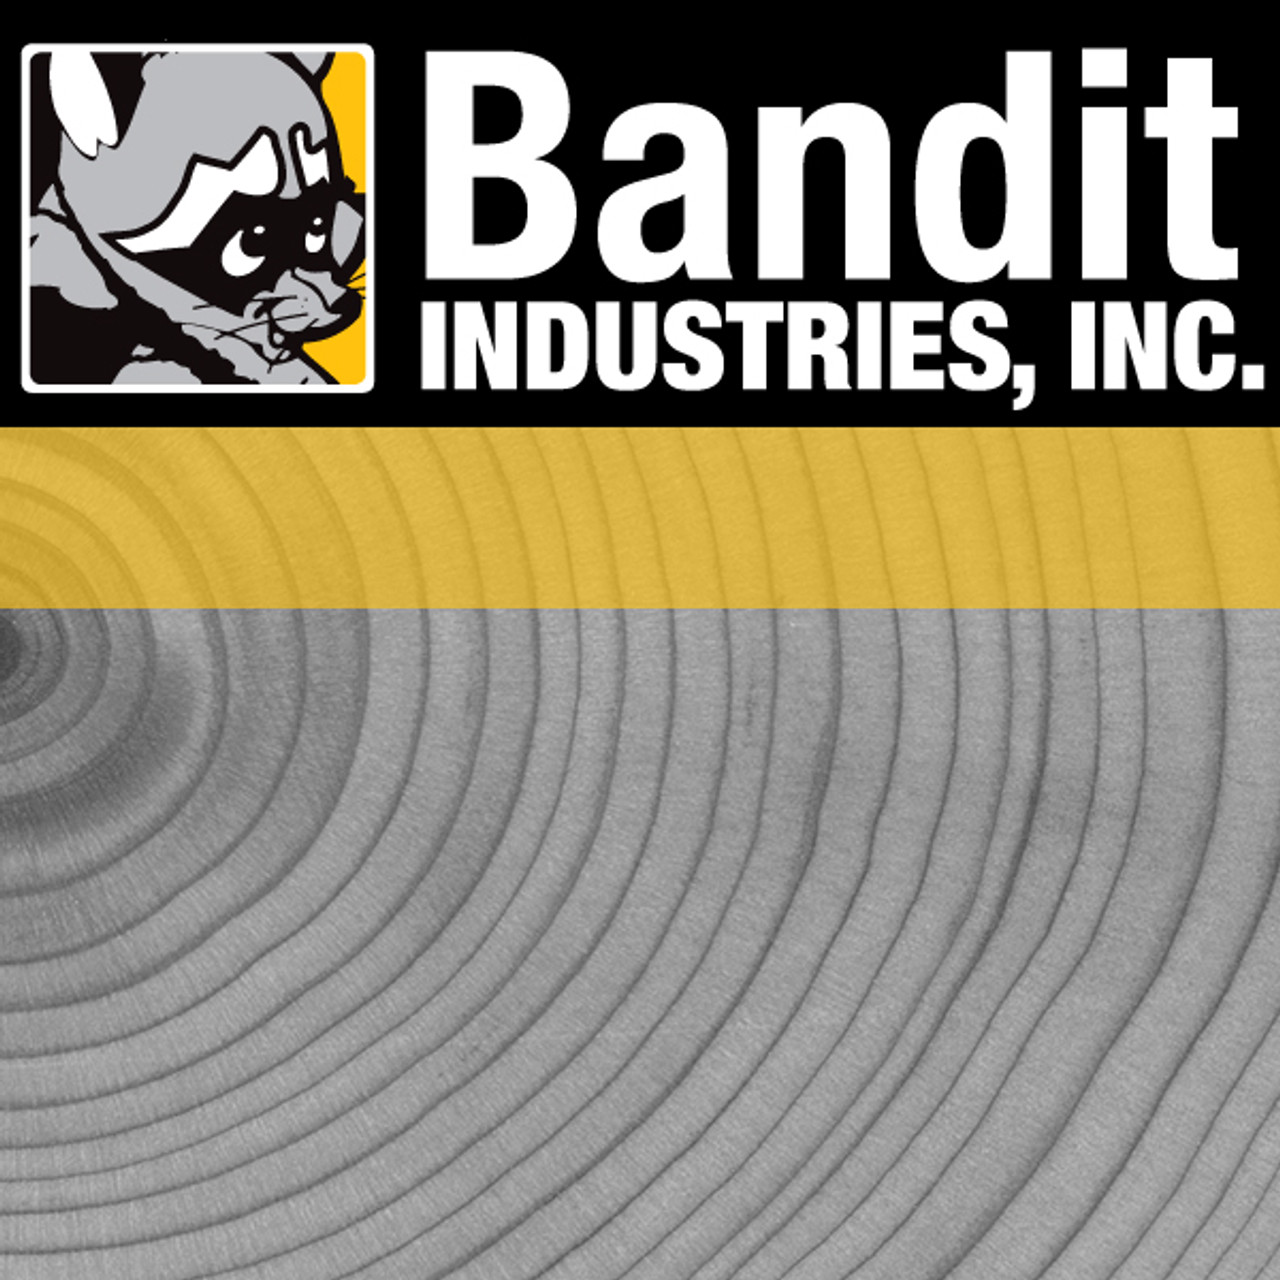 900-5909-82: BANDIT 9 X 3.50-4 FLAT FREE SMOOTH TIRE, 3/4"" BALL BEARING